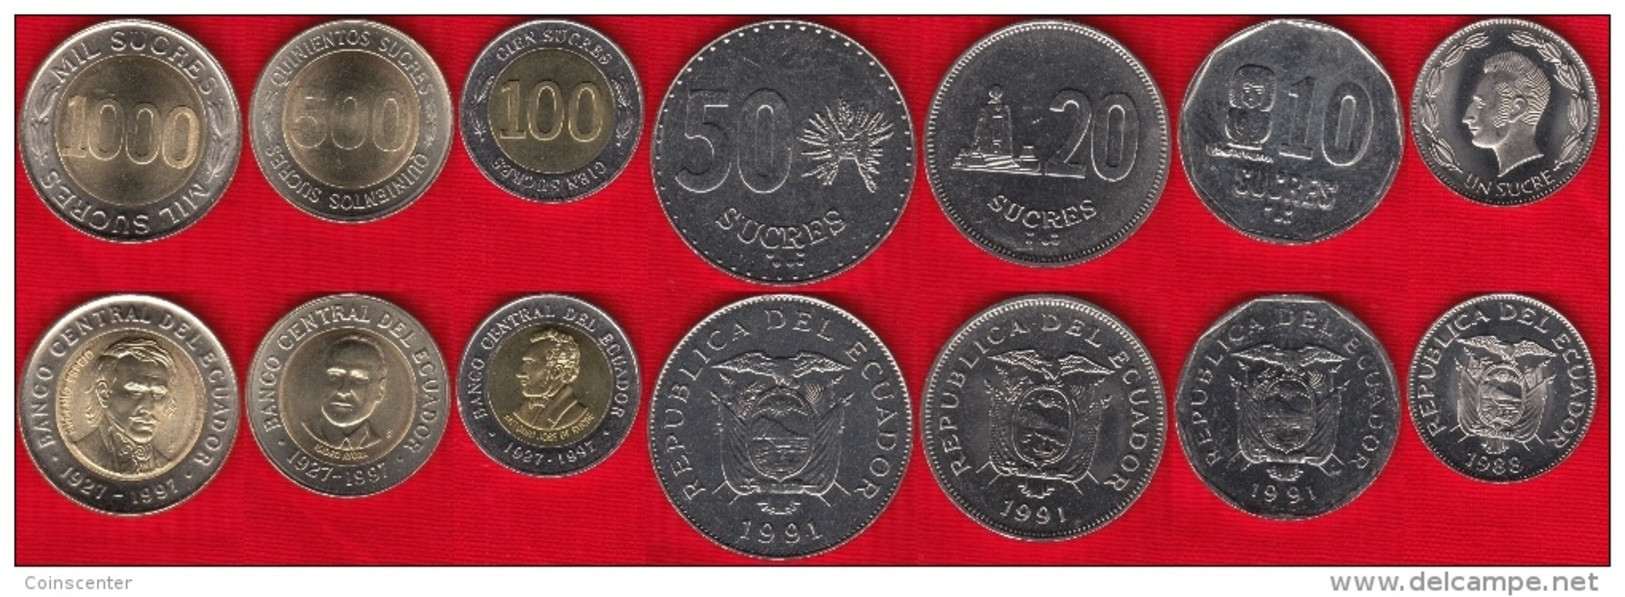 Ecuador Set Of 7 Coins: 1 - 1000 Sucres 1988-1997 UNC - Ecuador